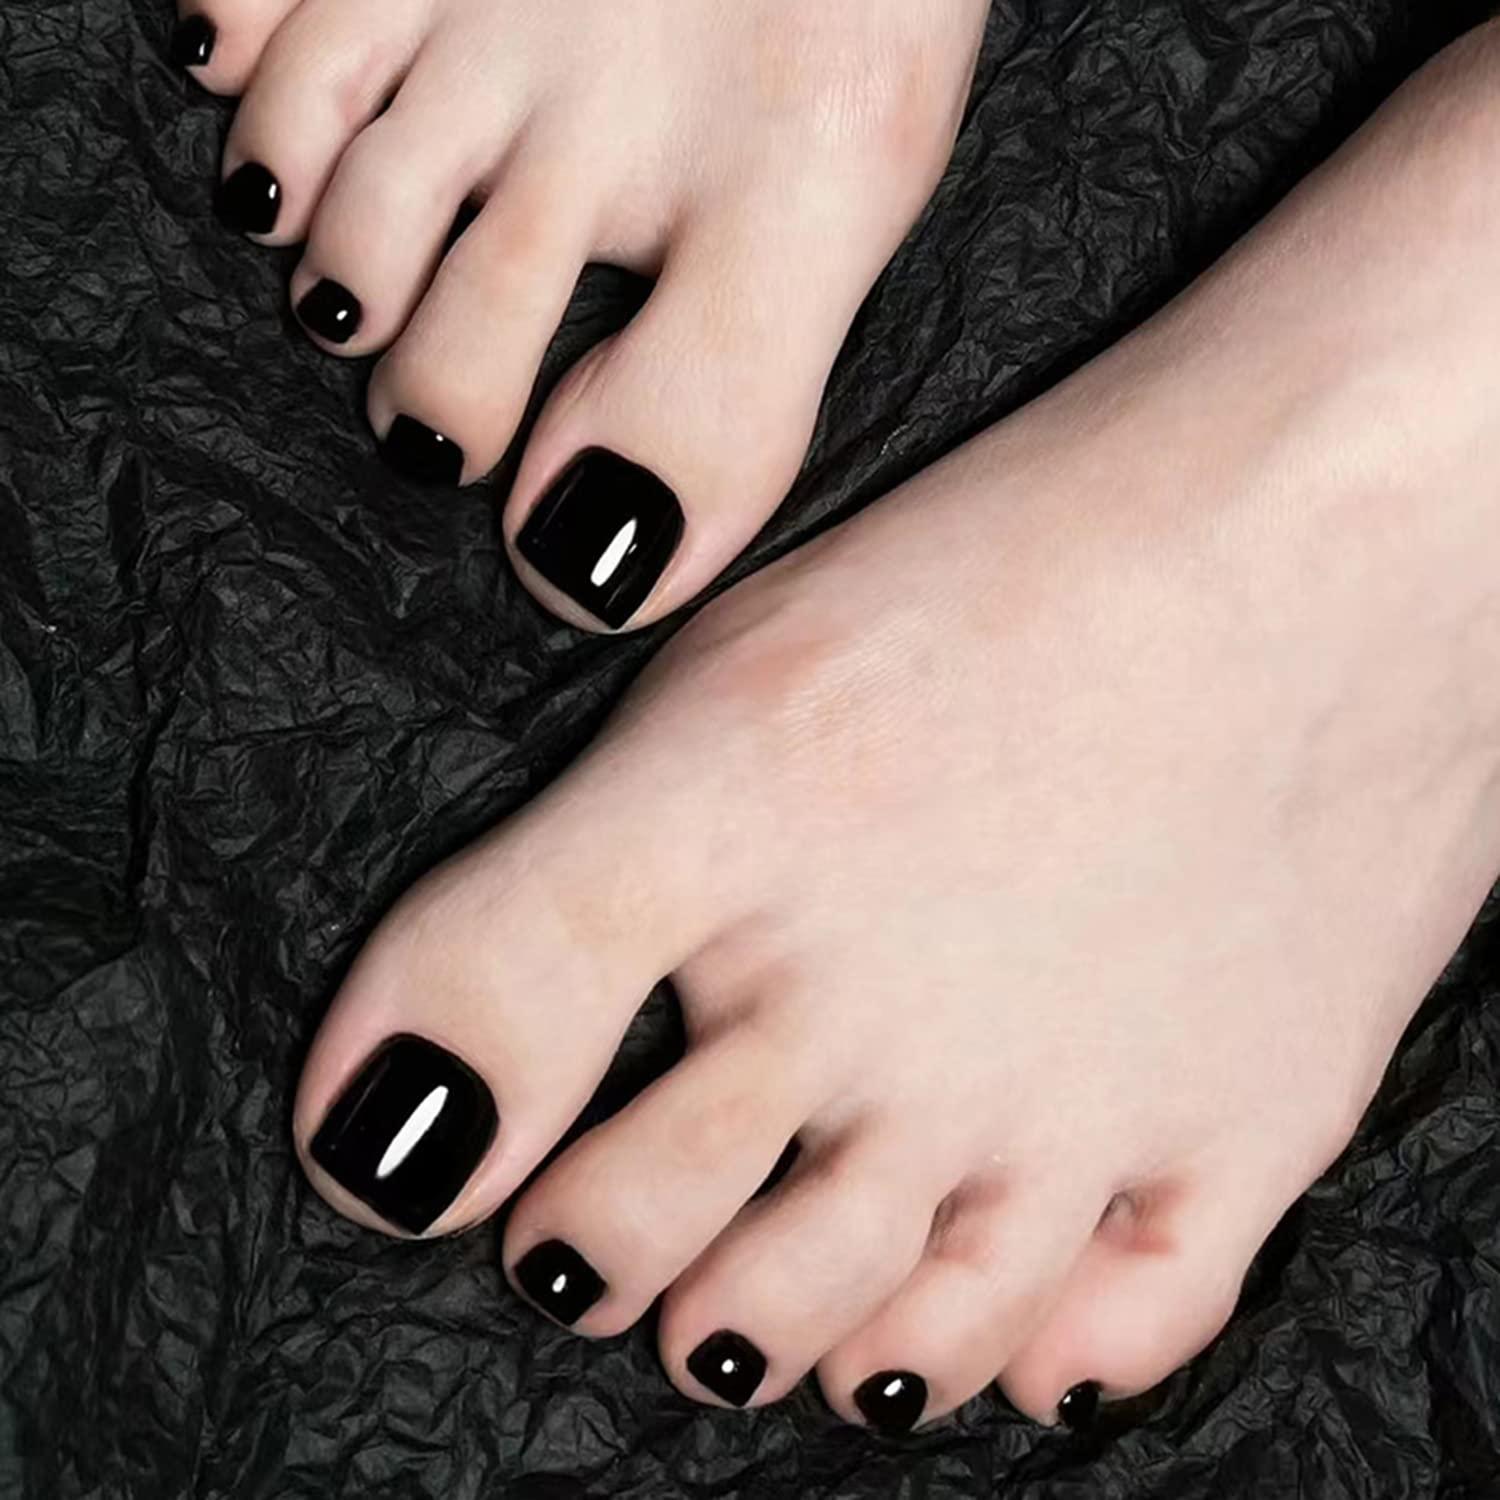 File:Toe nails black.jpg - Wikimedia Commons